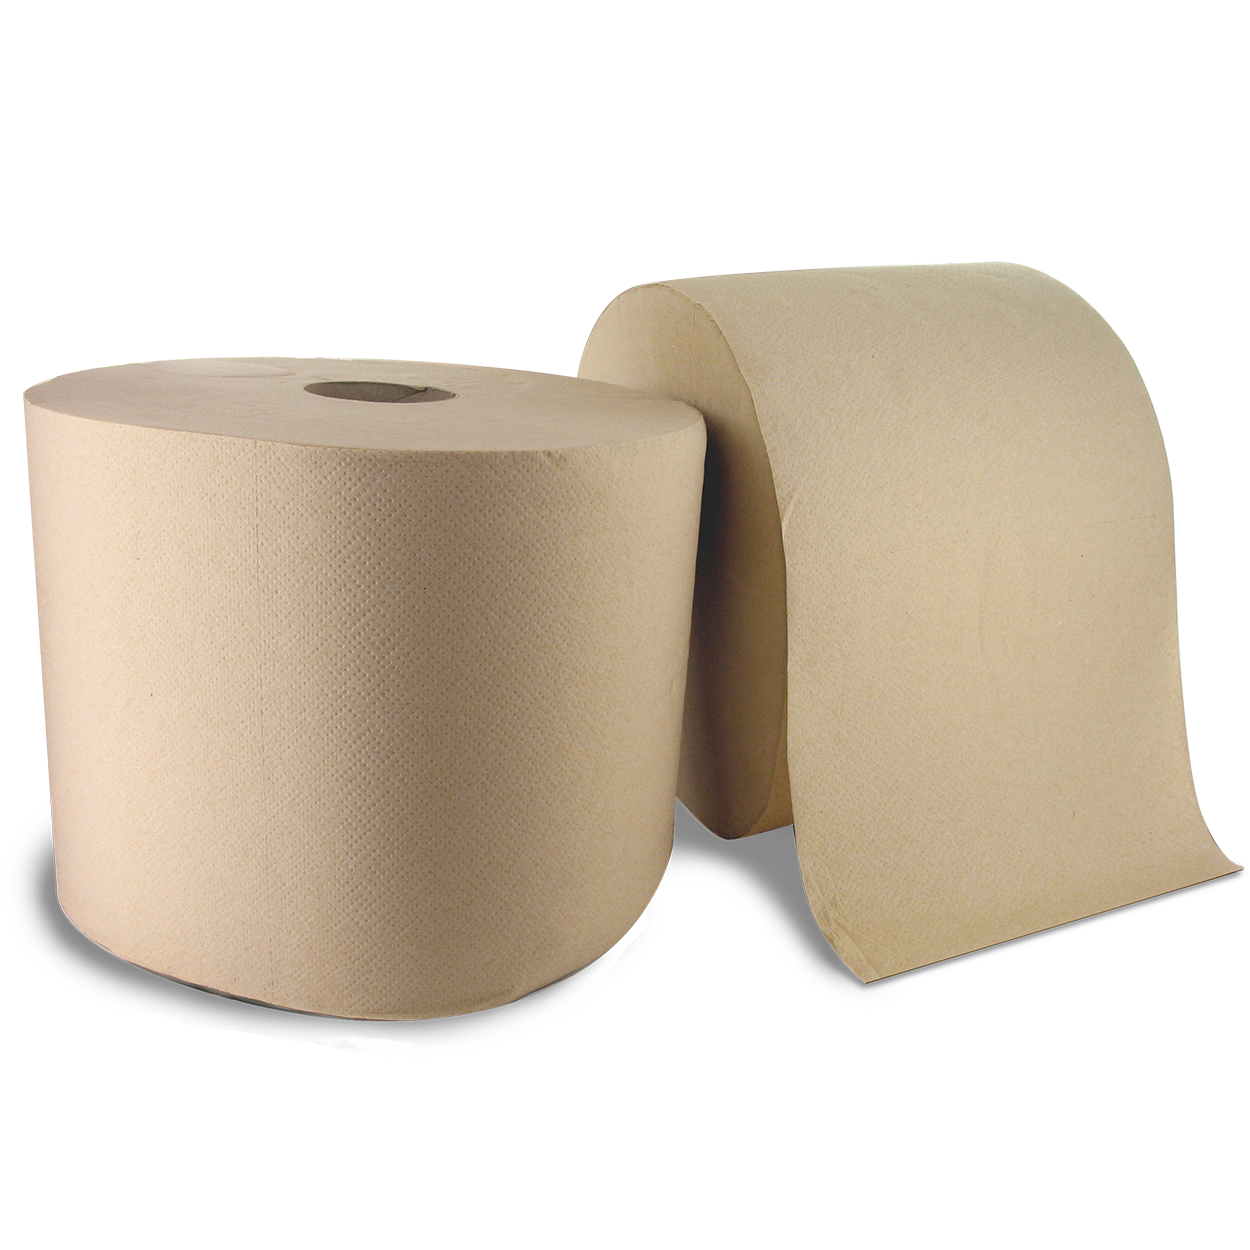 Set of 2 biodegradable paper rolls 